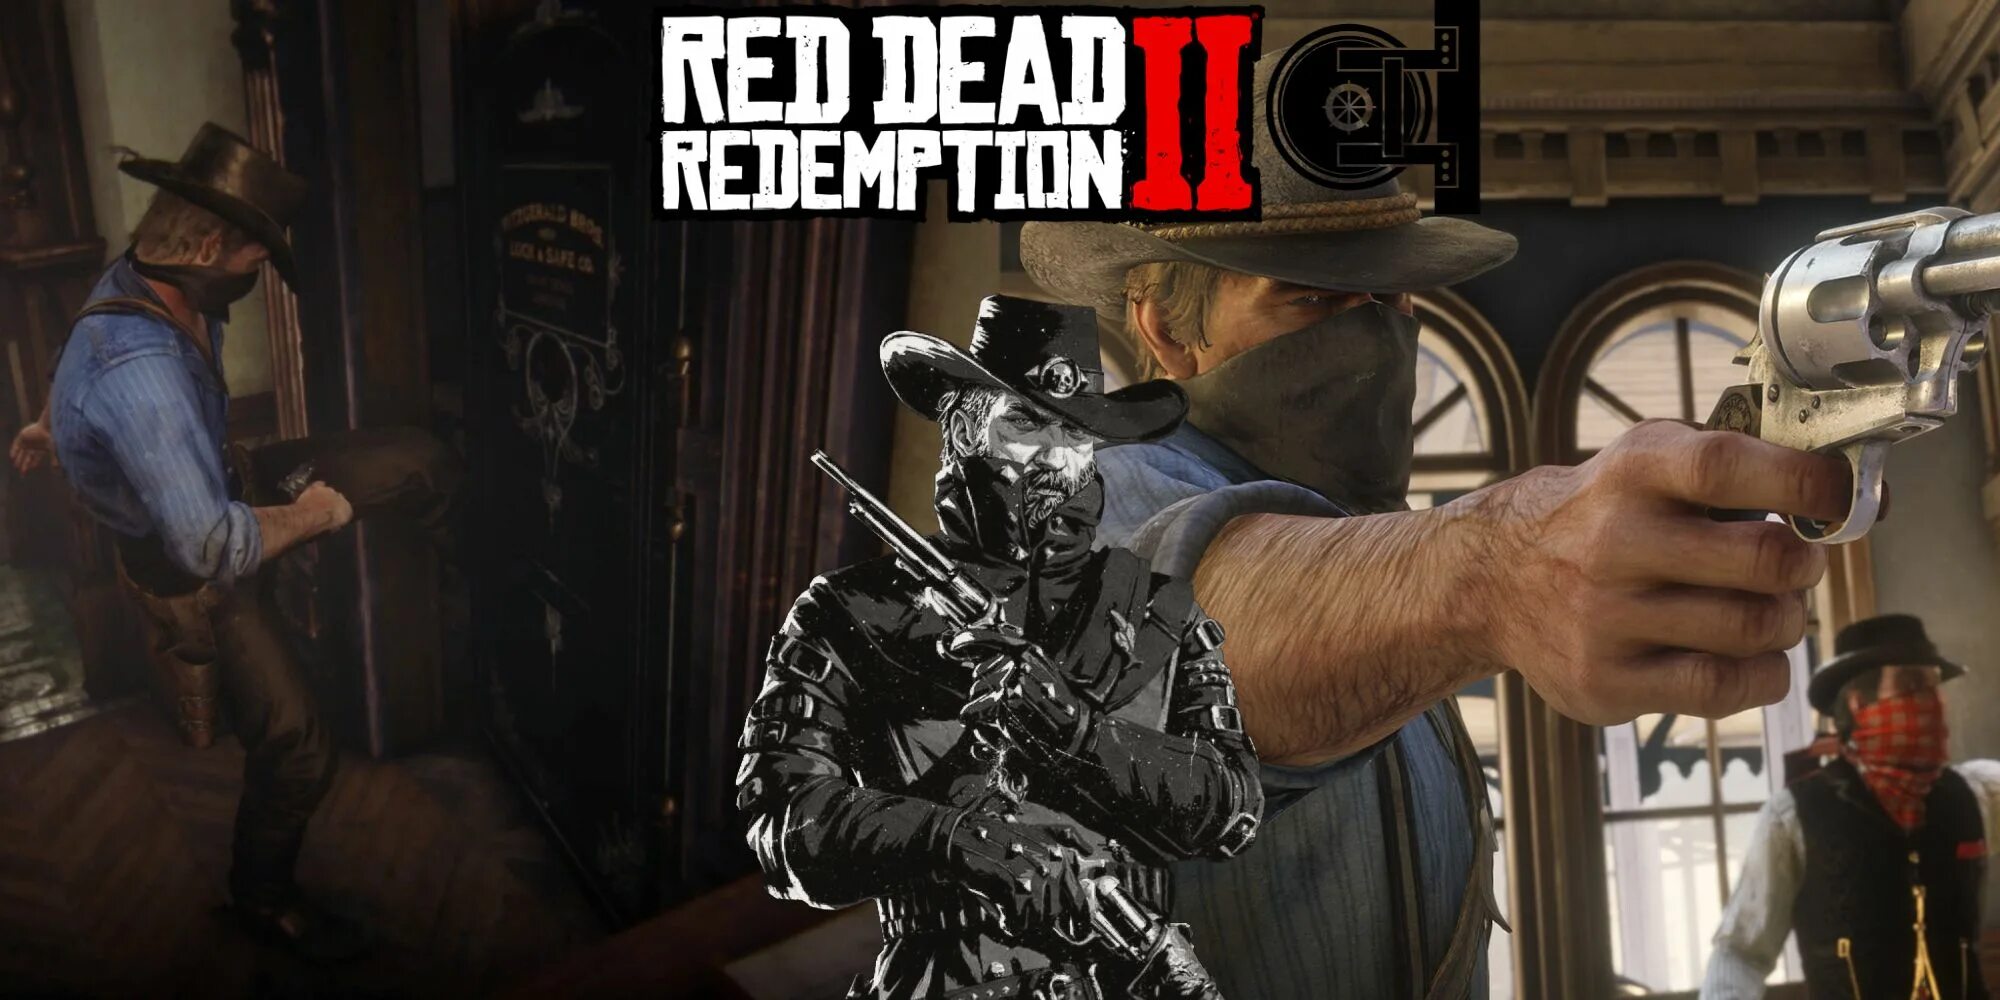 Ограбление банка РДР 2. Red Dead Redemption 2 Robbery.